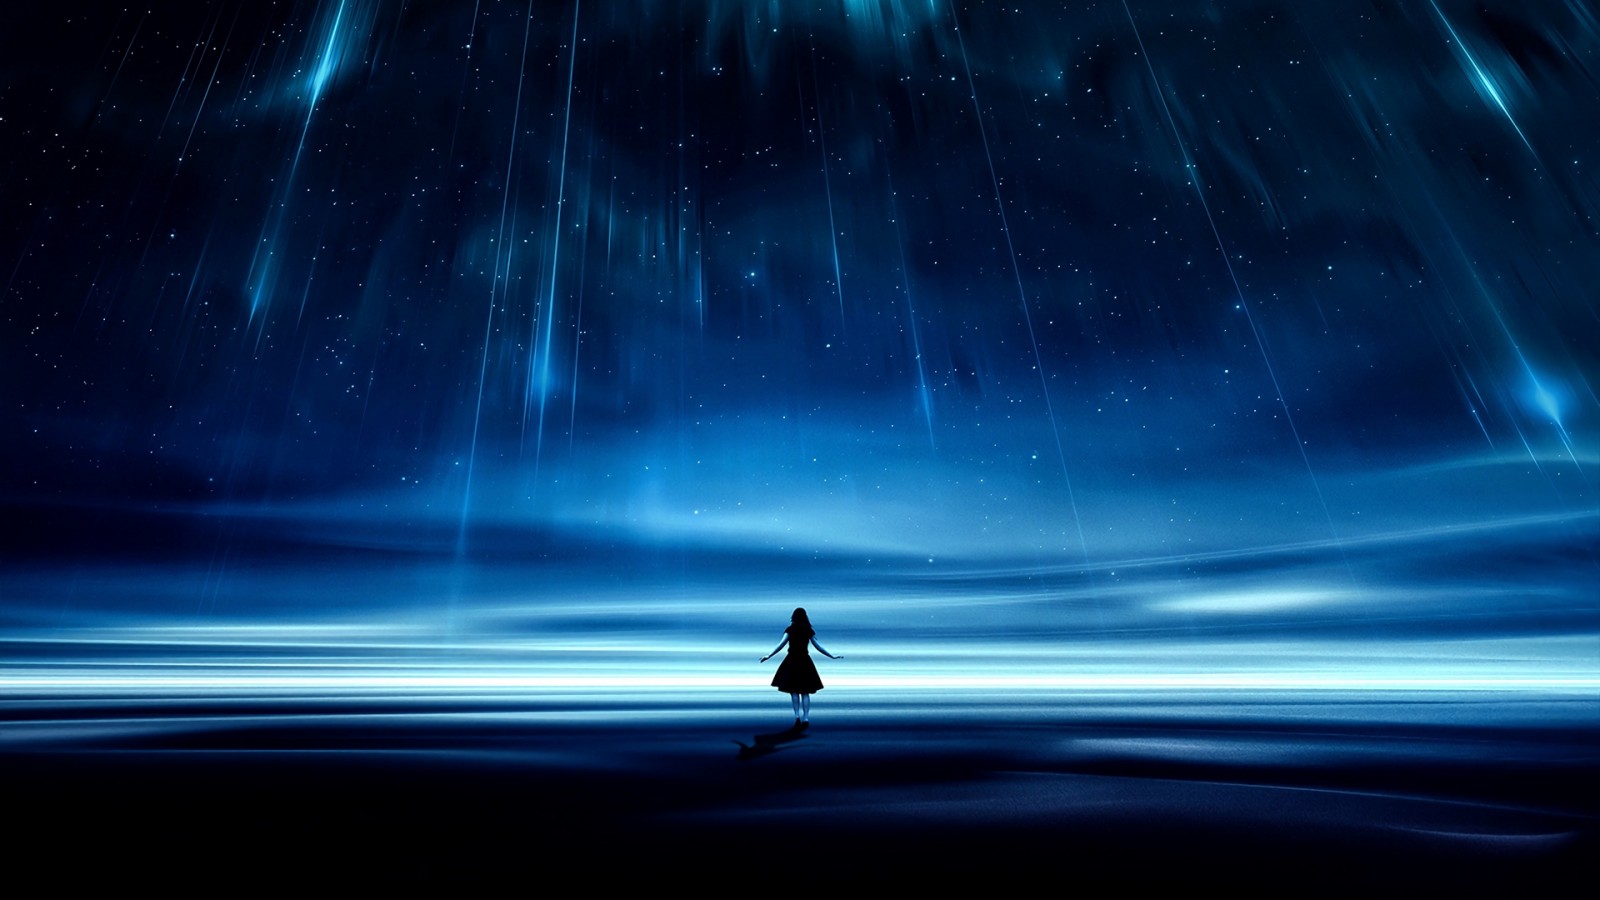 Girl silhouette under a starry sky HD Wallpaper